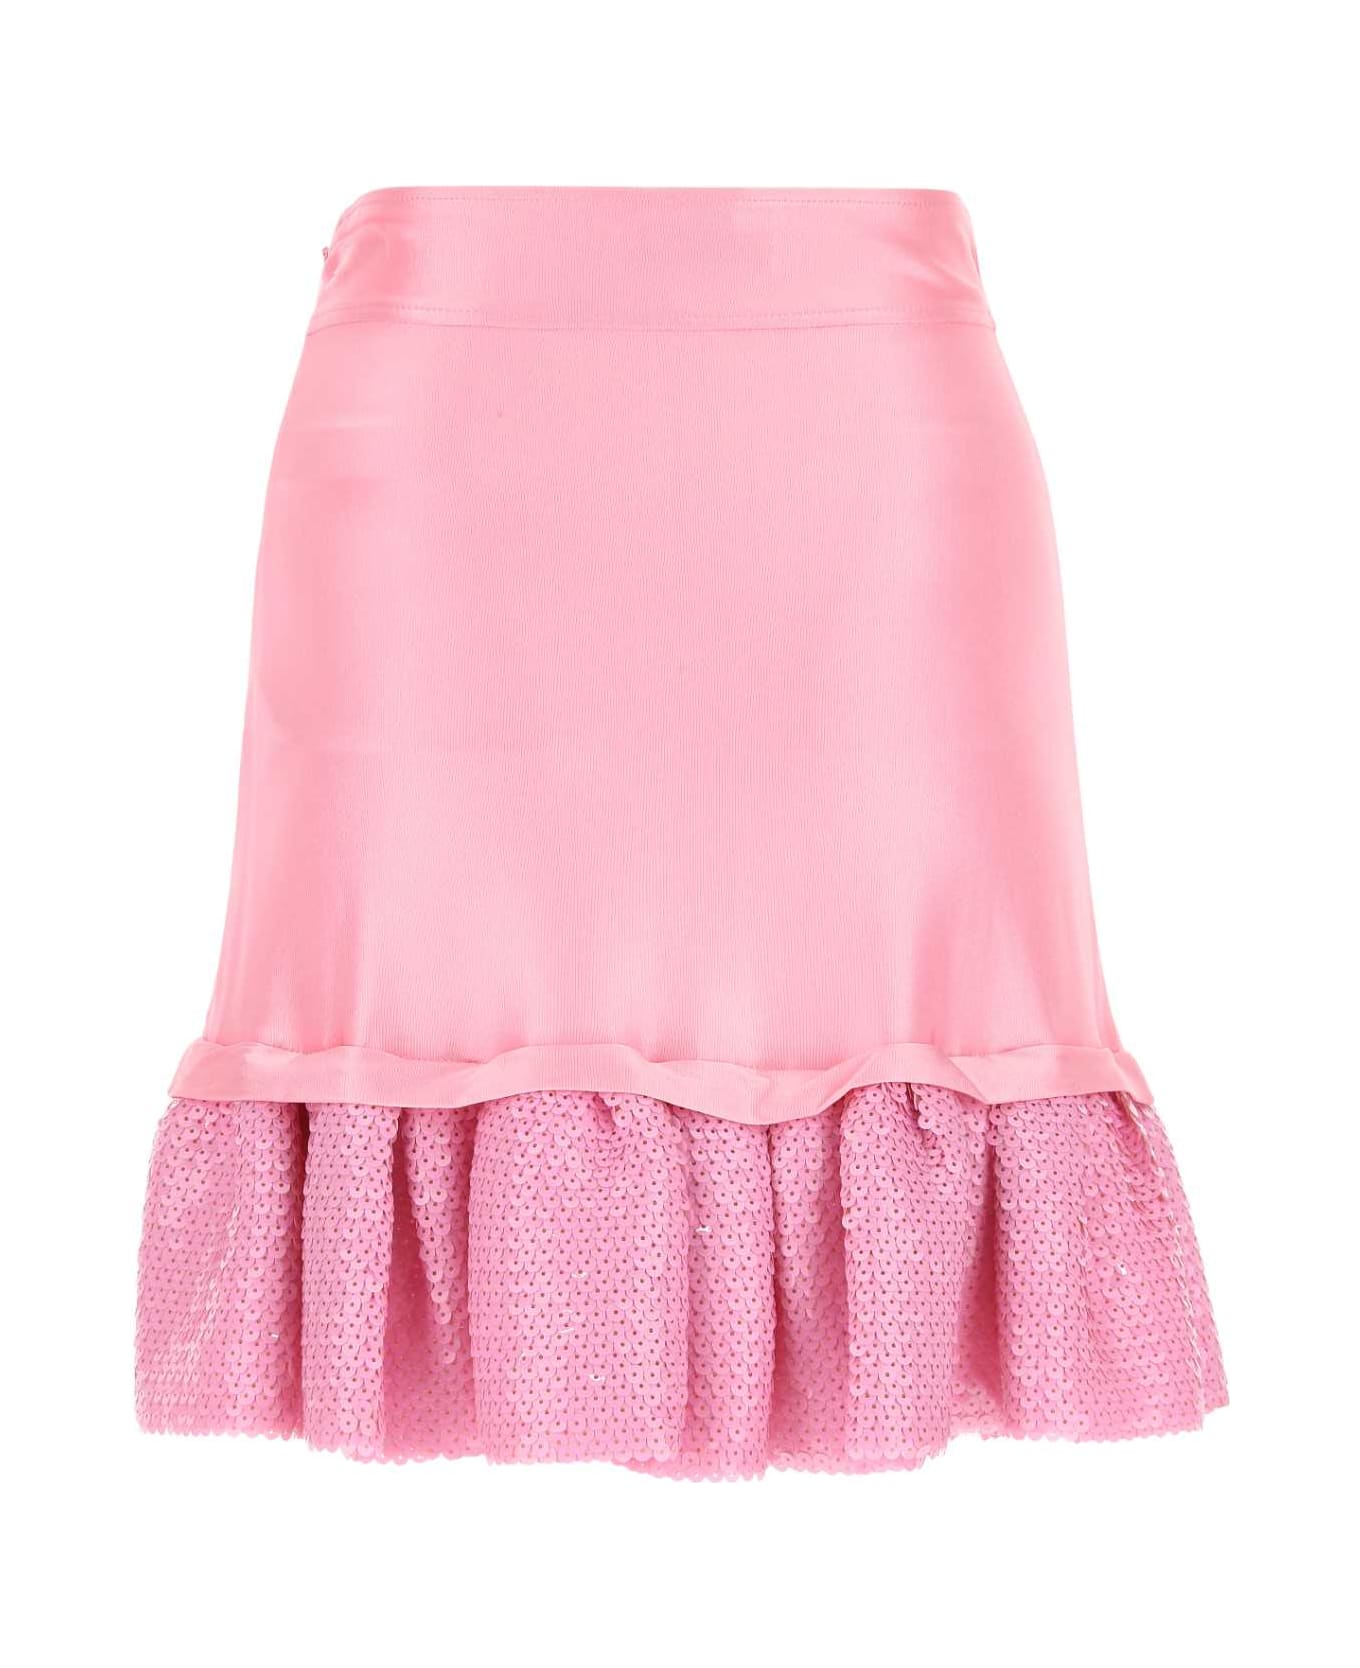 Paco Rabanne Pink Stretch Viscose Mini Skirt - P652